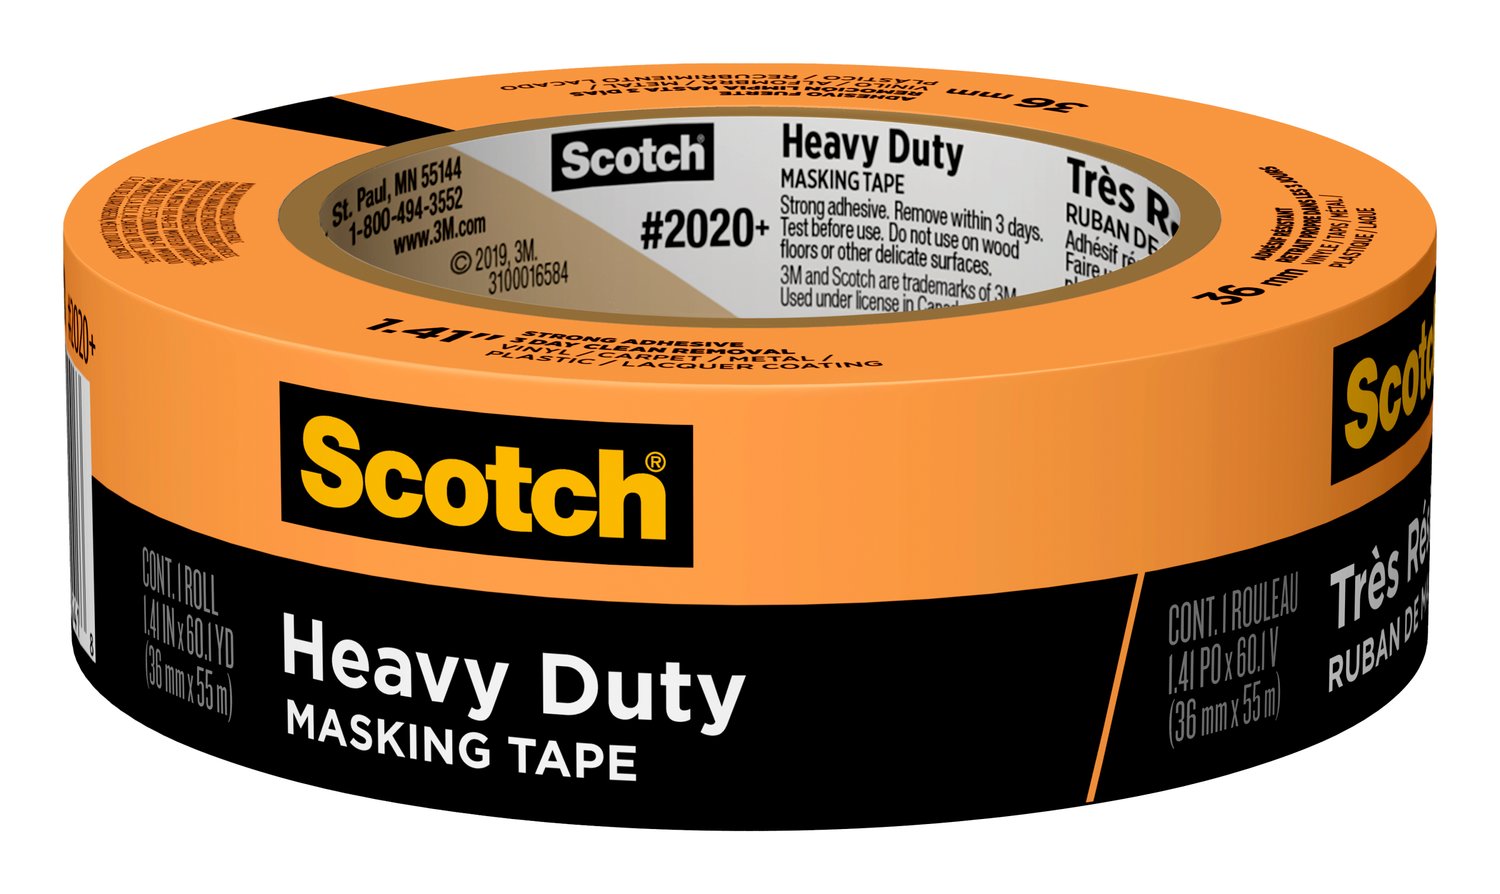 7100191192 - Scotch Heavy Duty Masking Tape 2020+-36AP, 1.41 in x 60.1 yd (36mm x
55m)